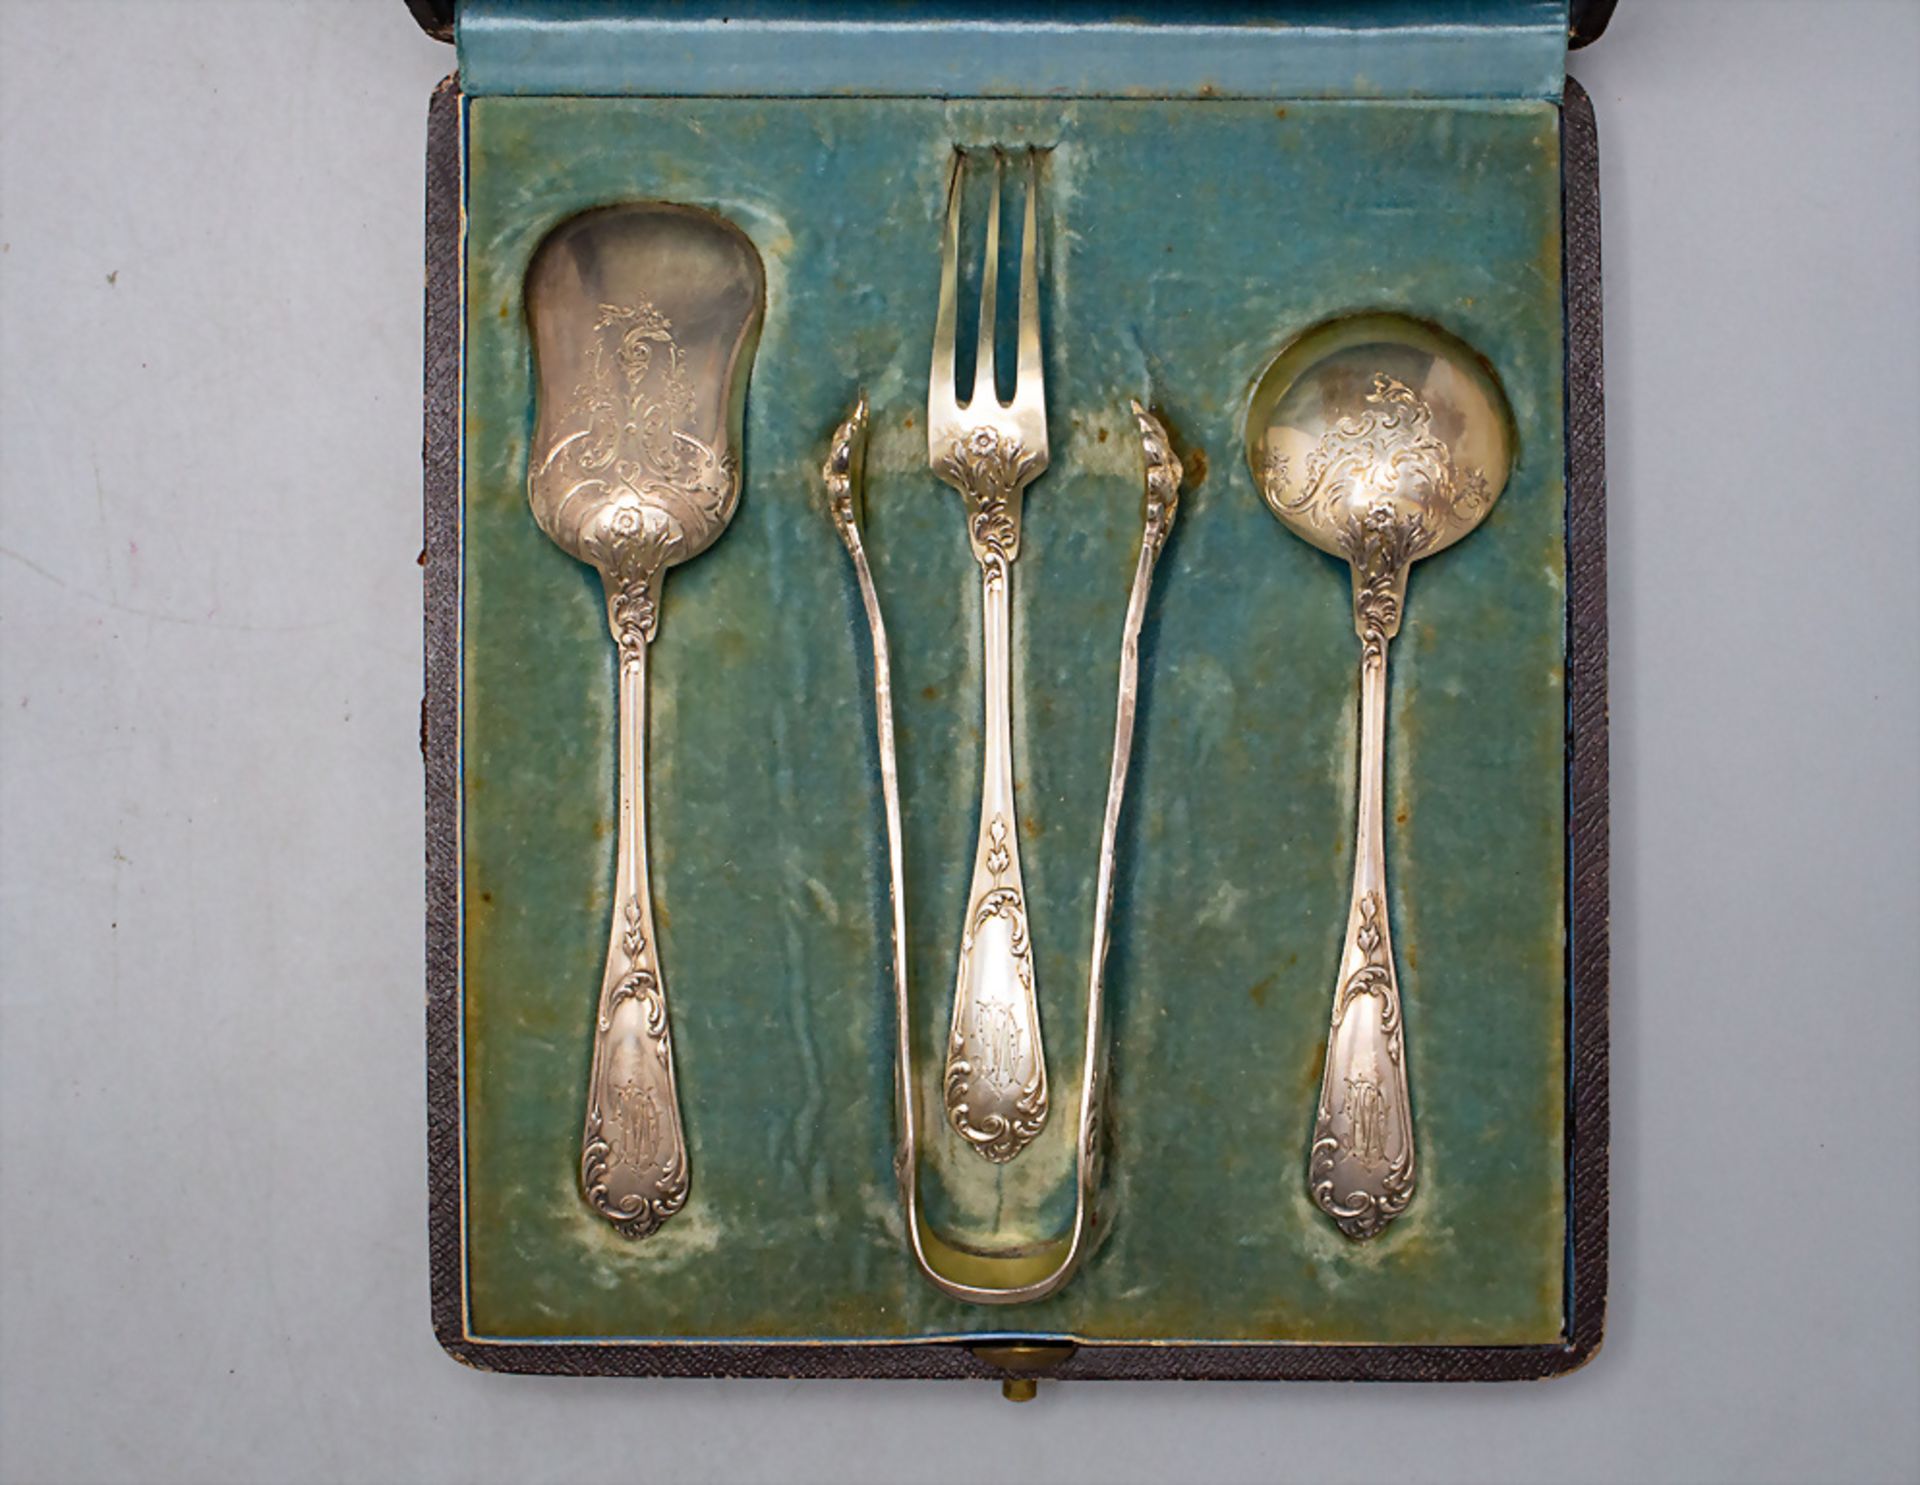 4 Teile Vorlegebesteck / A set of 4 pieces of serving cutlery, Tallois & Mayence, Paris, um 1900 - Image 2 of 9